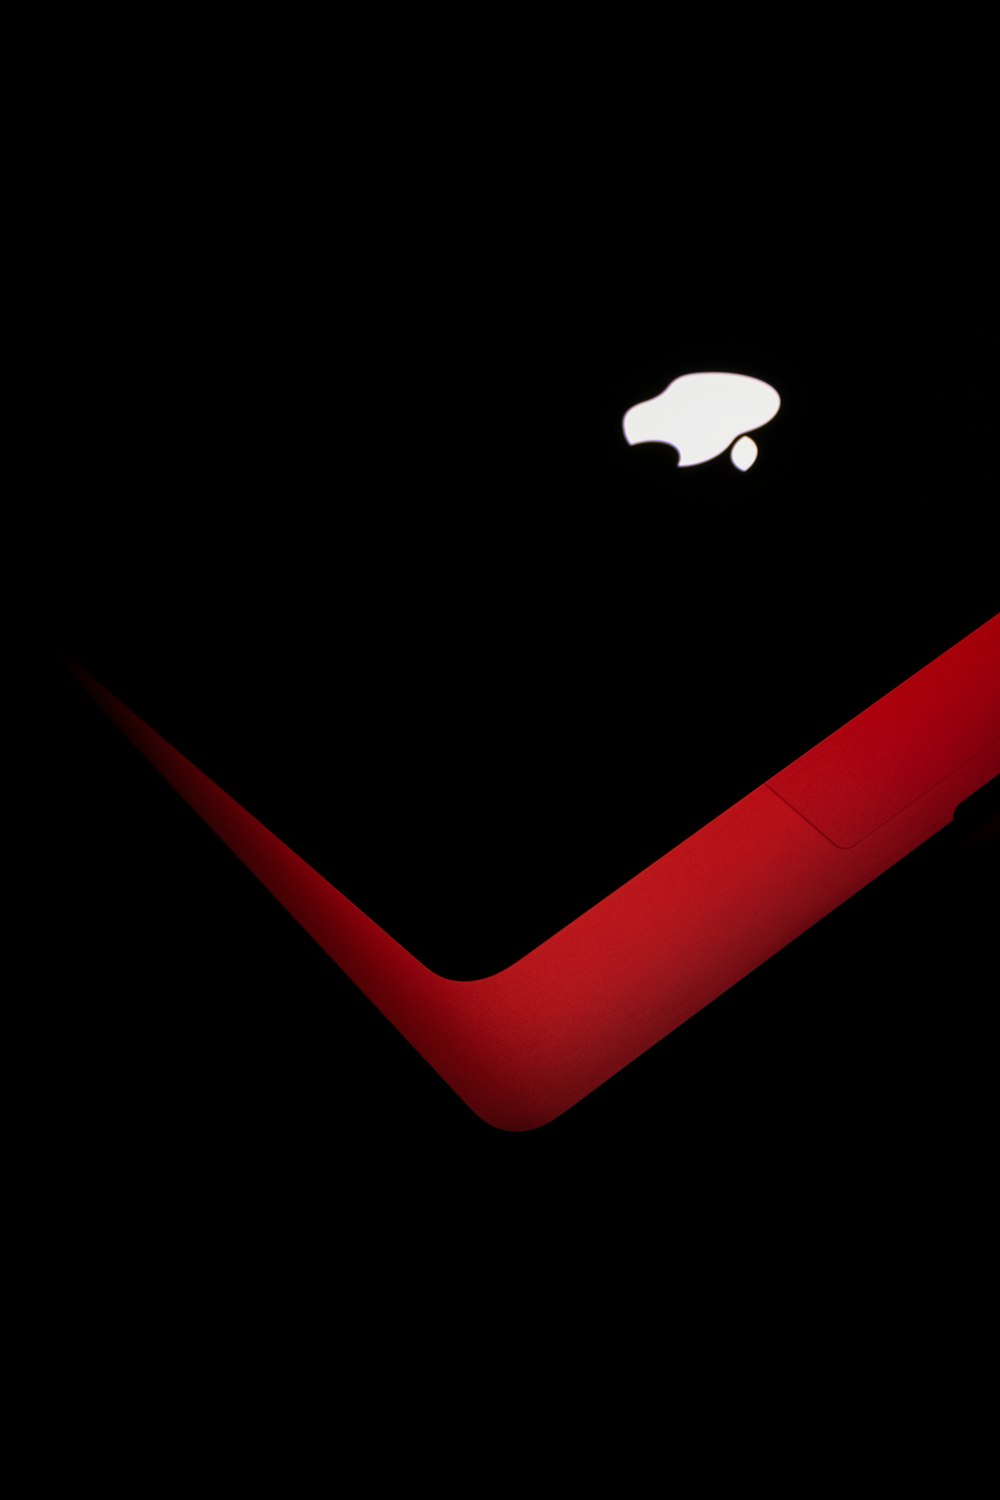 black and orange apple logo photo – Free Macbook air Image on Unsplash